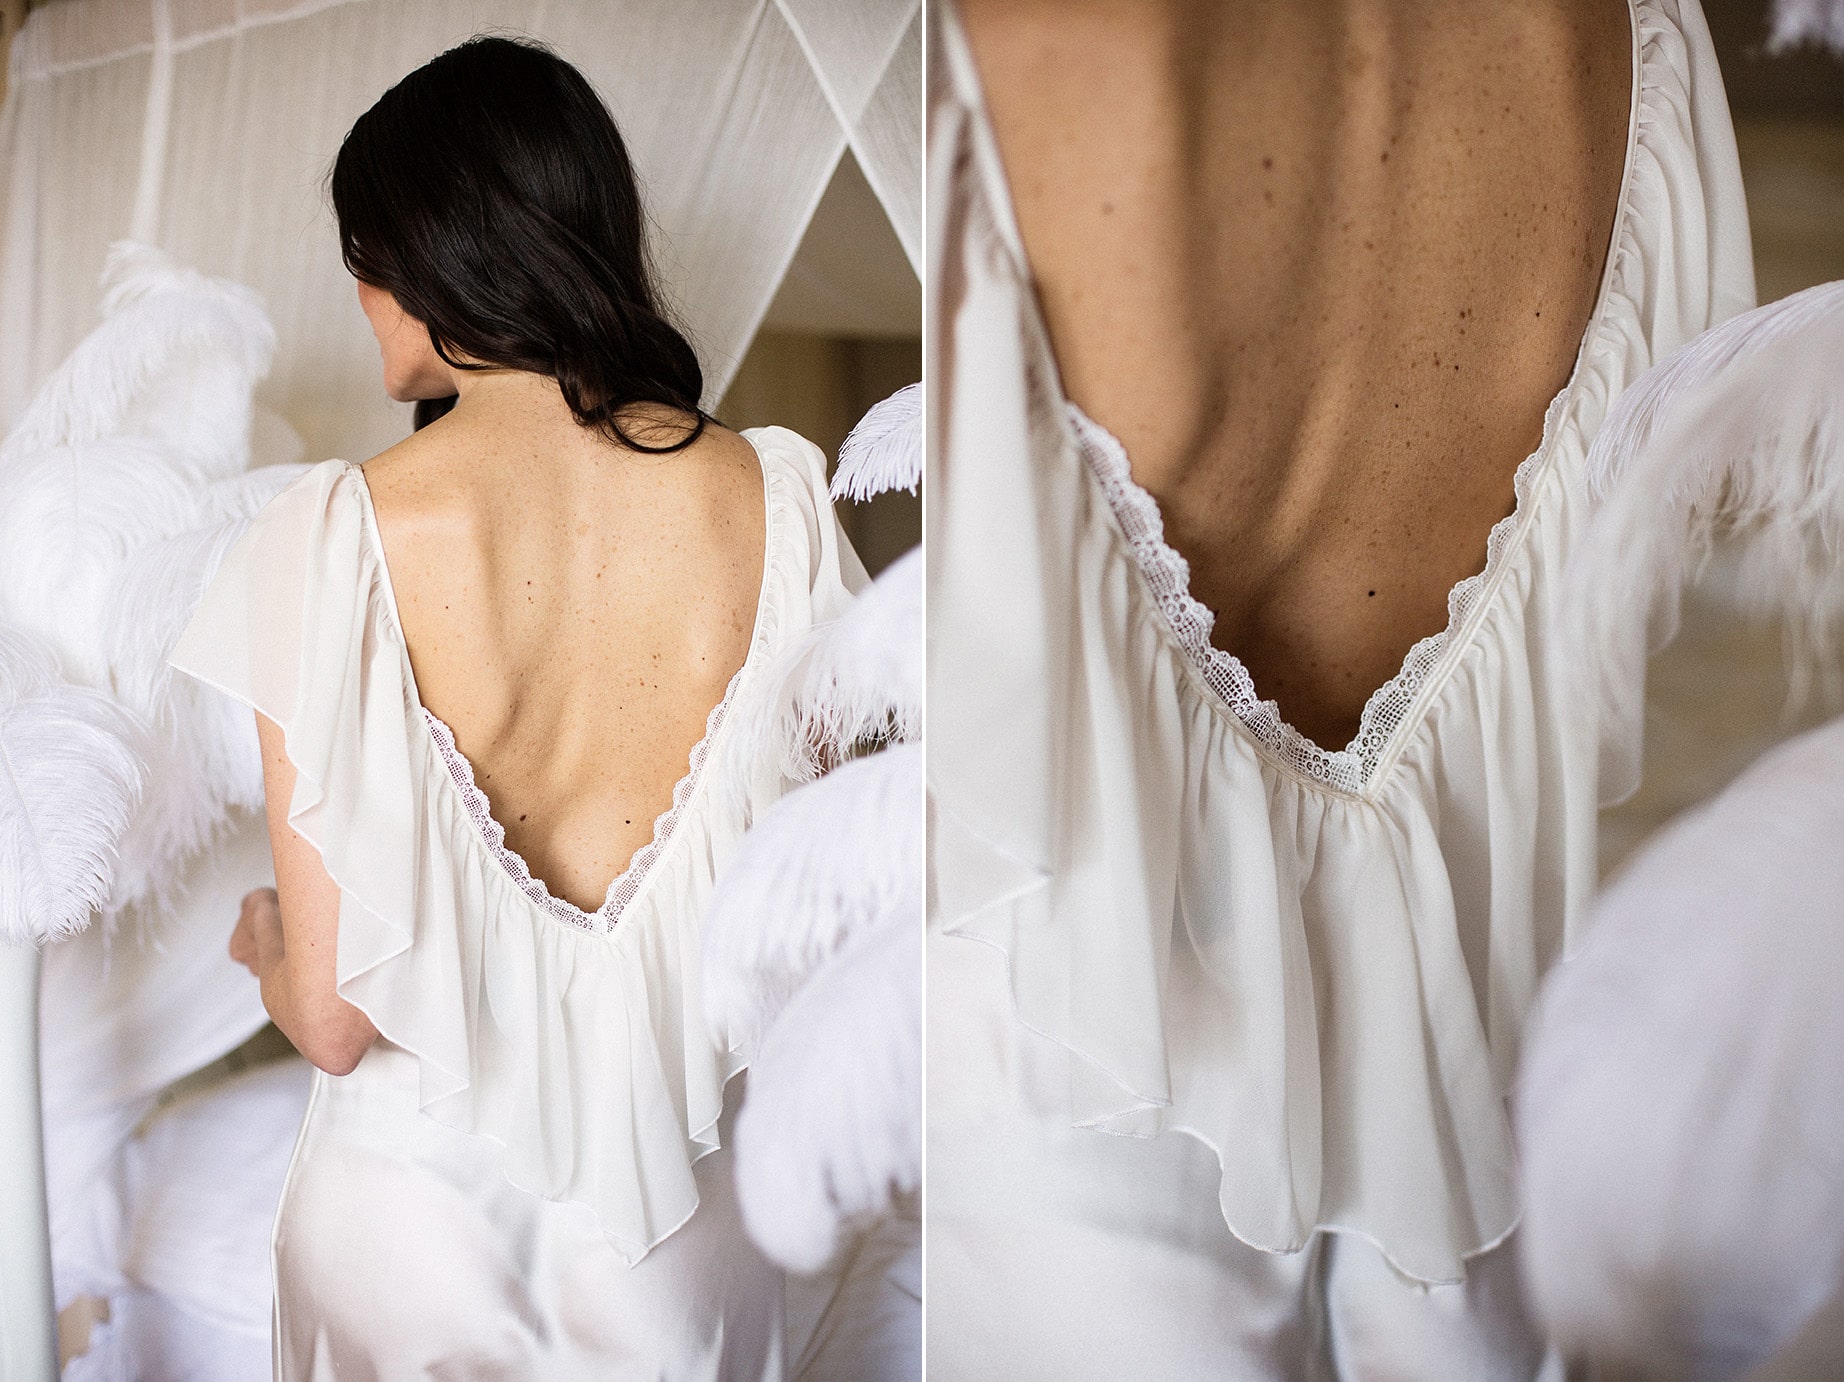 Bridal boudoir session with bridal lingerie